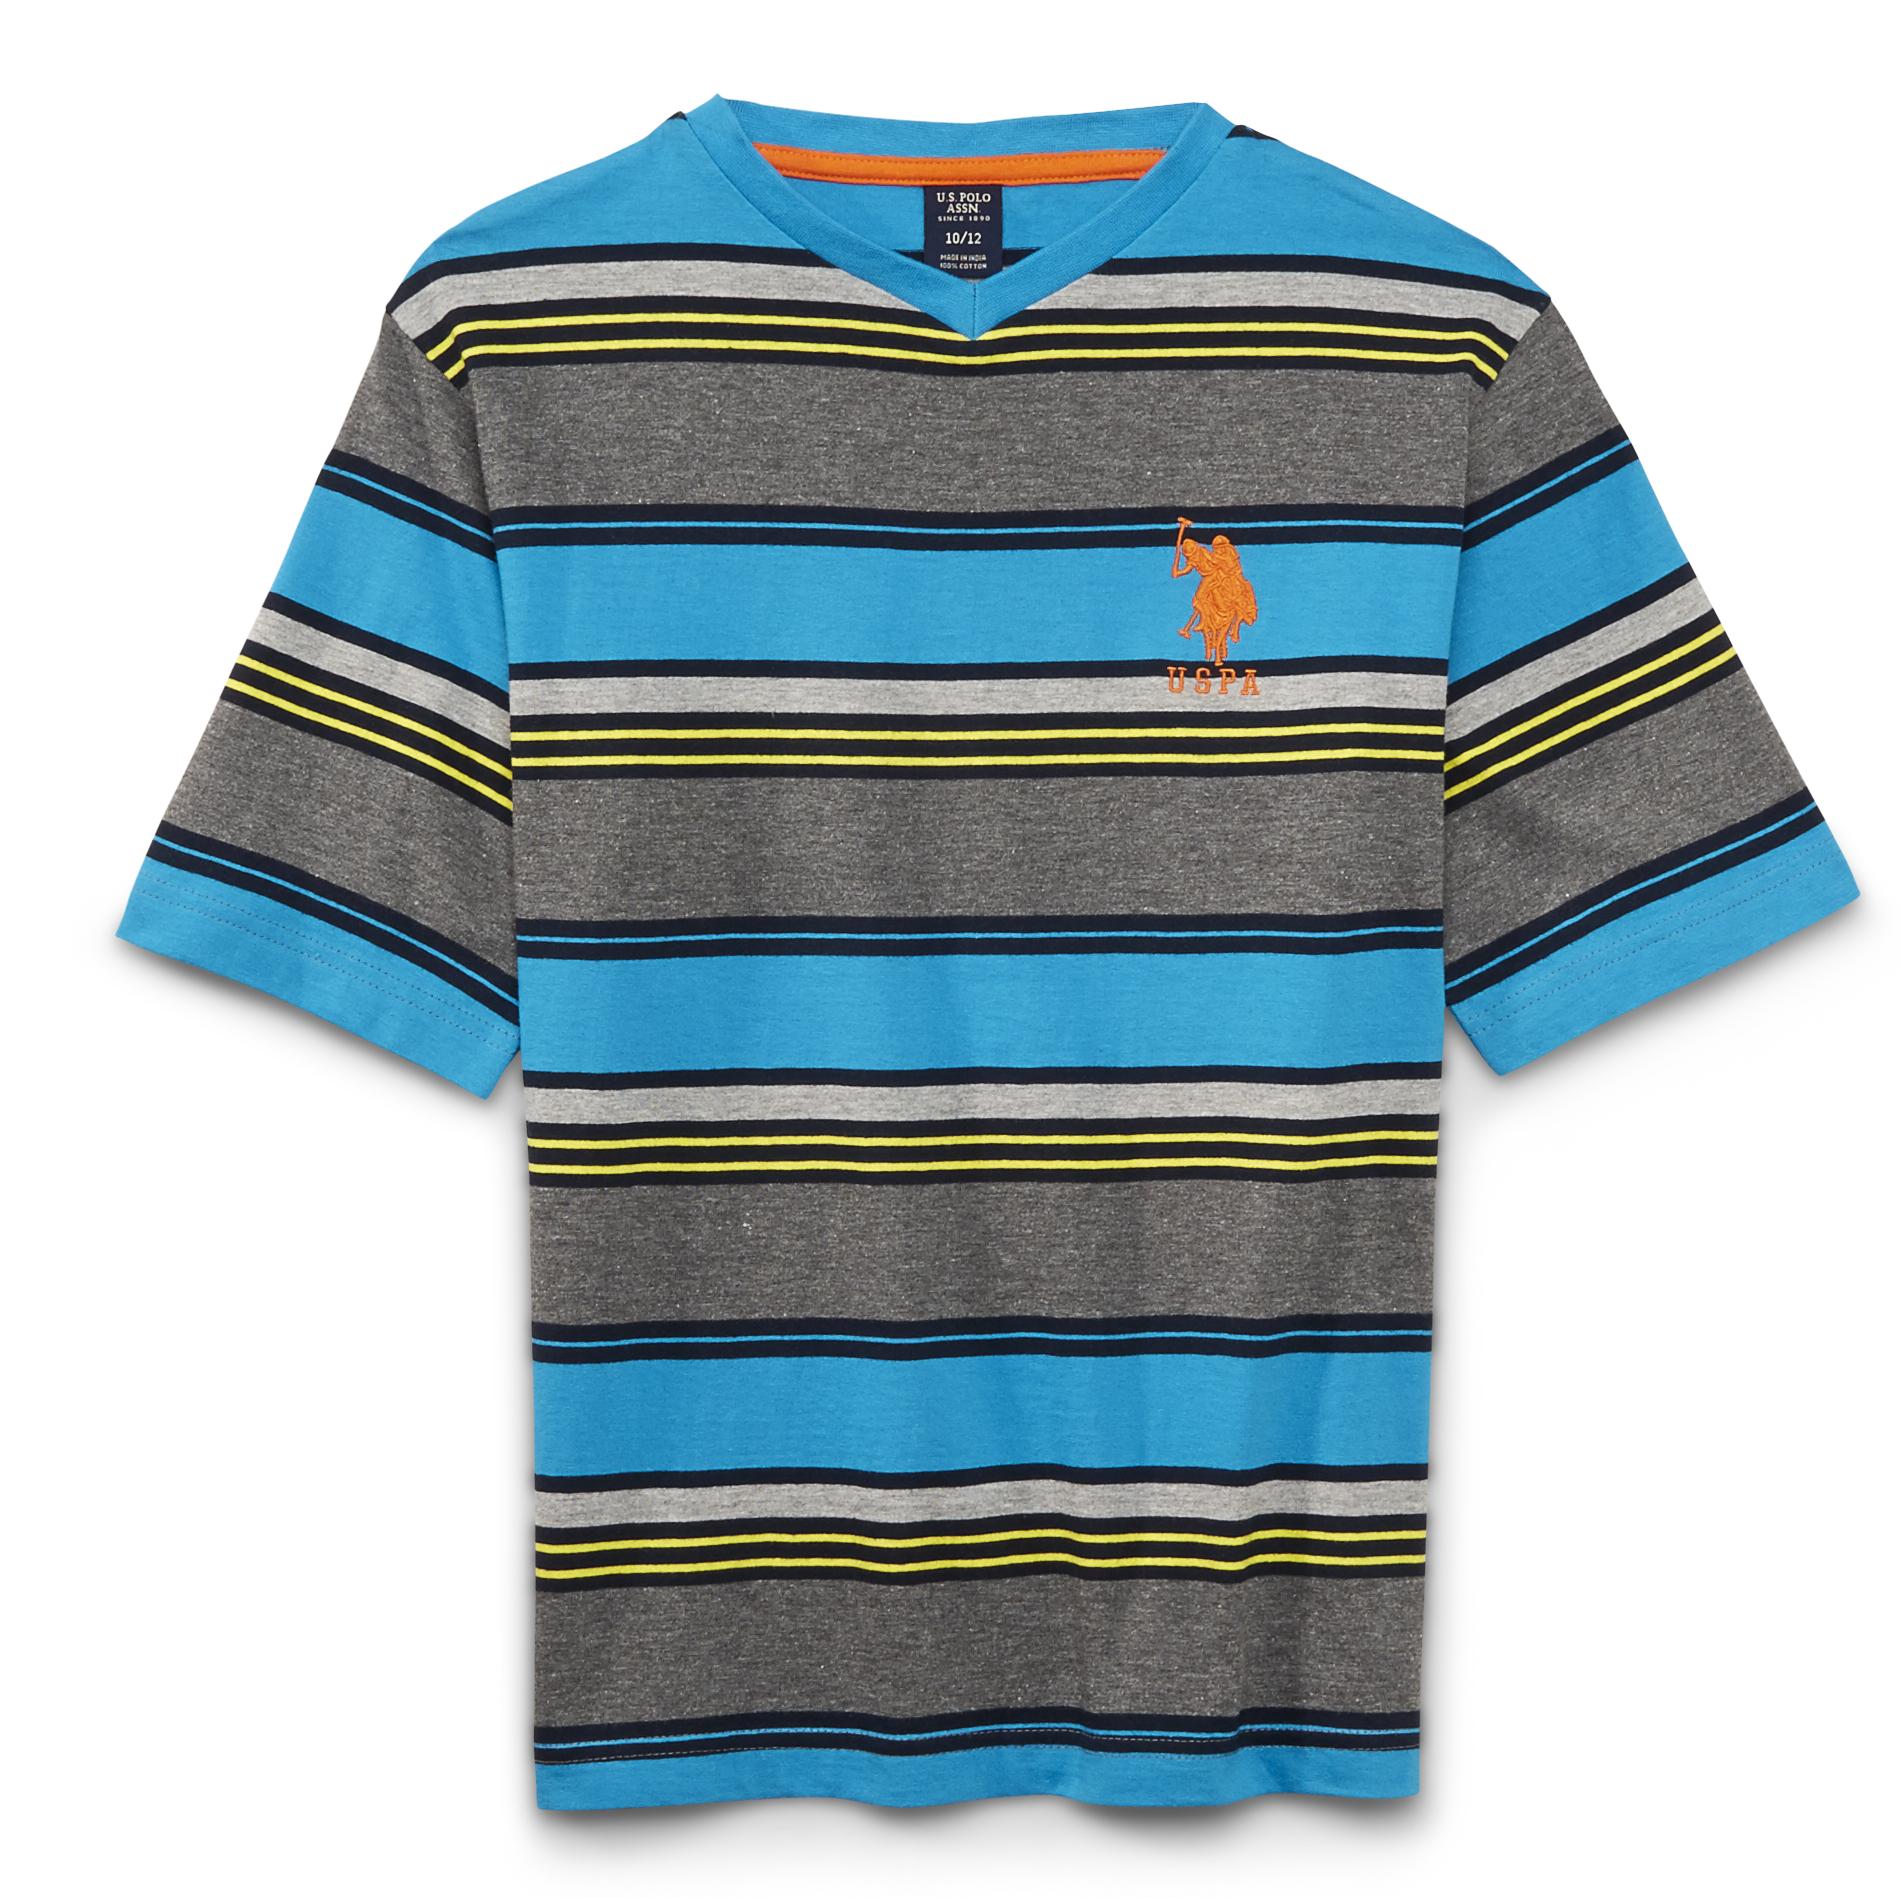 U.S. Polo Assn. Boy's V-Neck T-Shirt - Striped